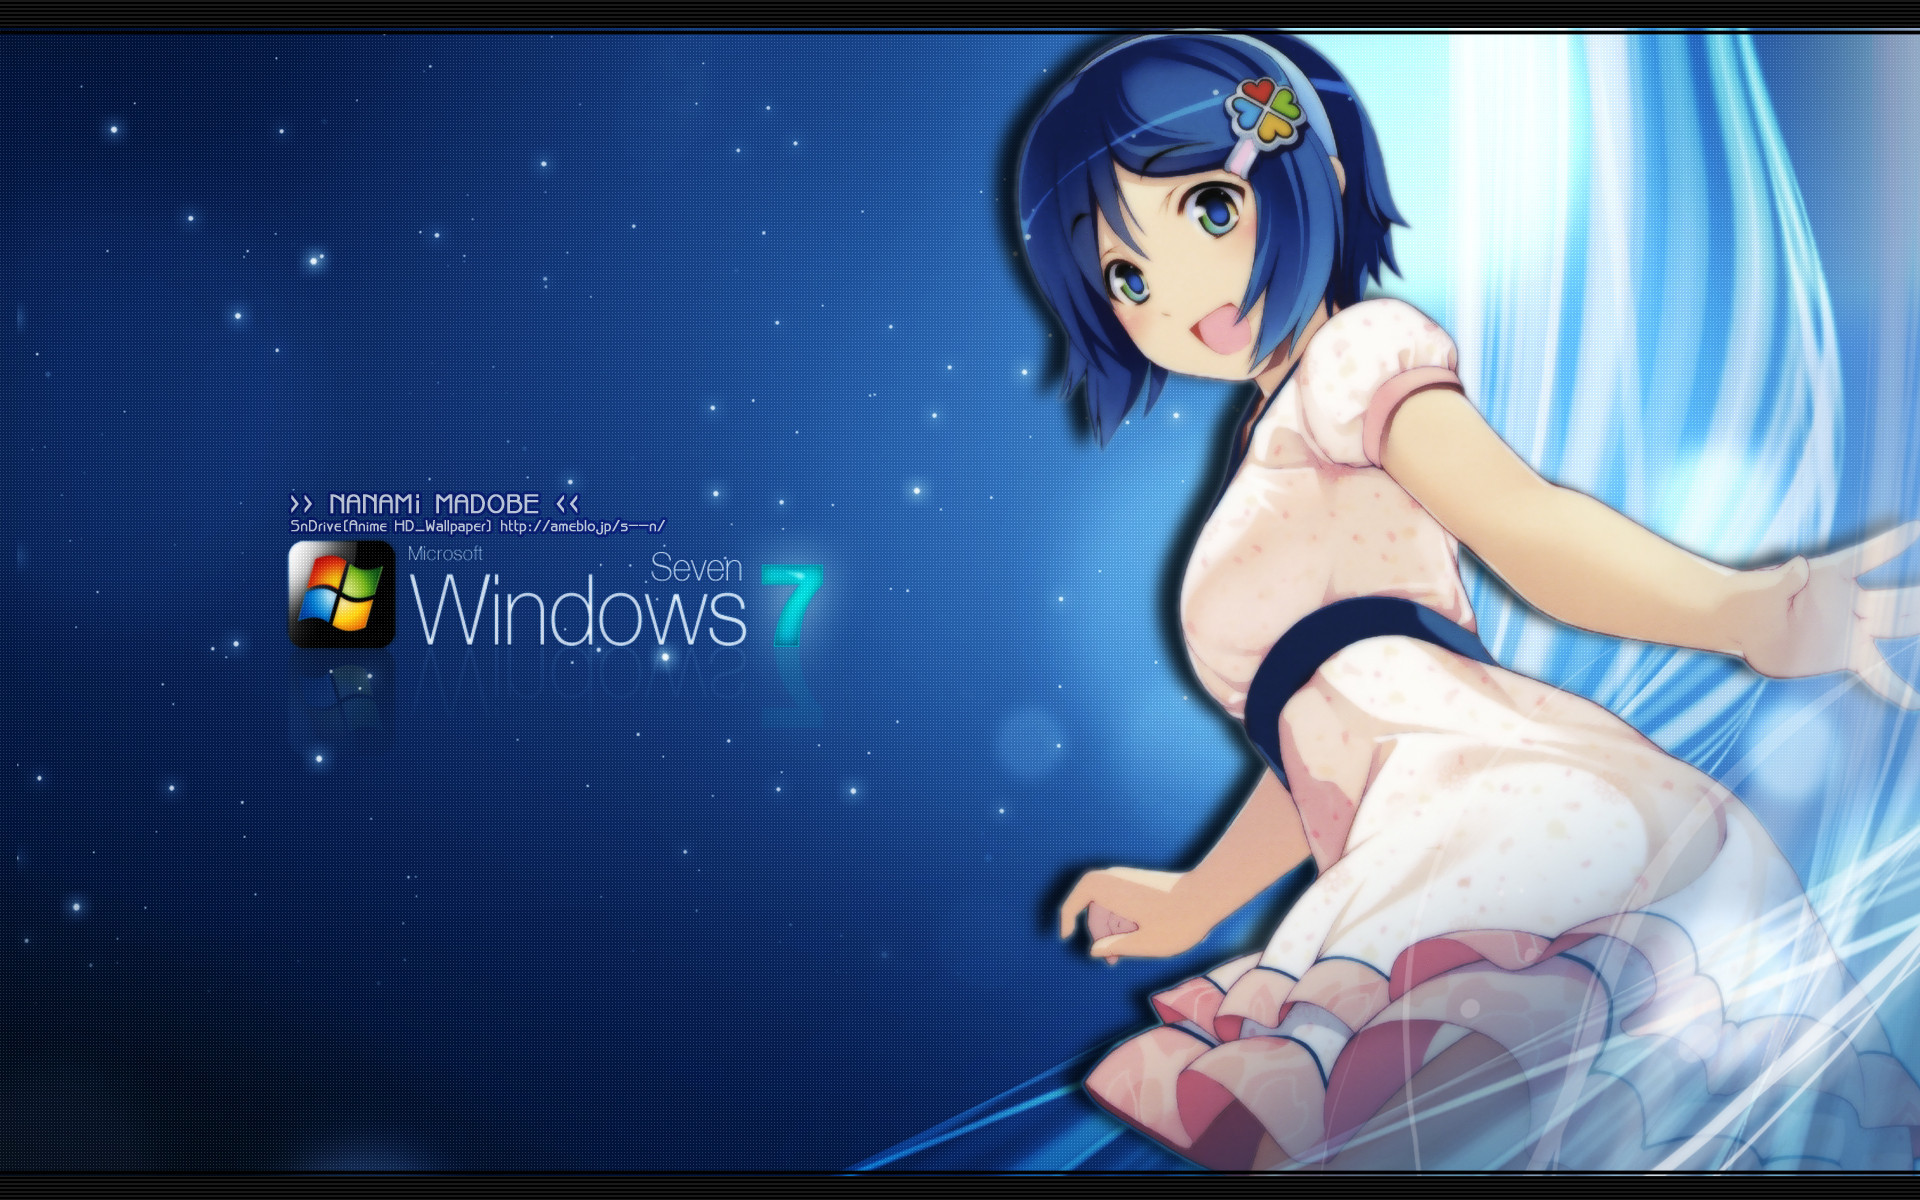 1920x1200 My favourite is Windows 7's mascot, Madobe Nanami